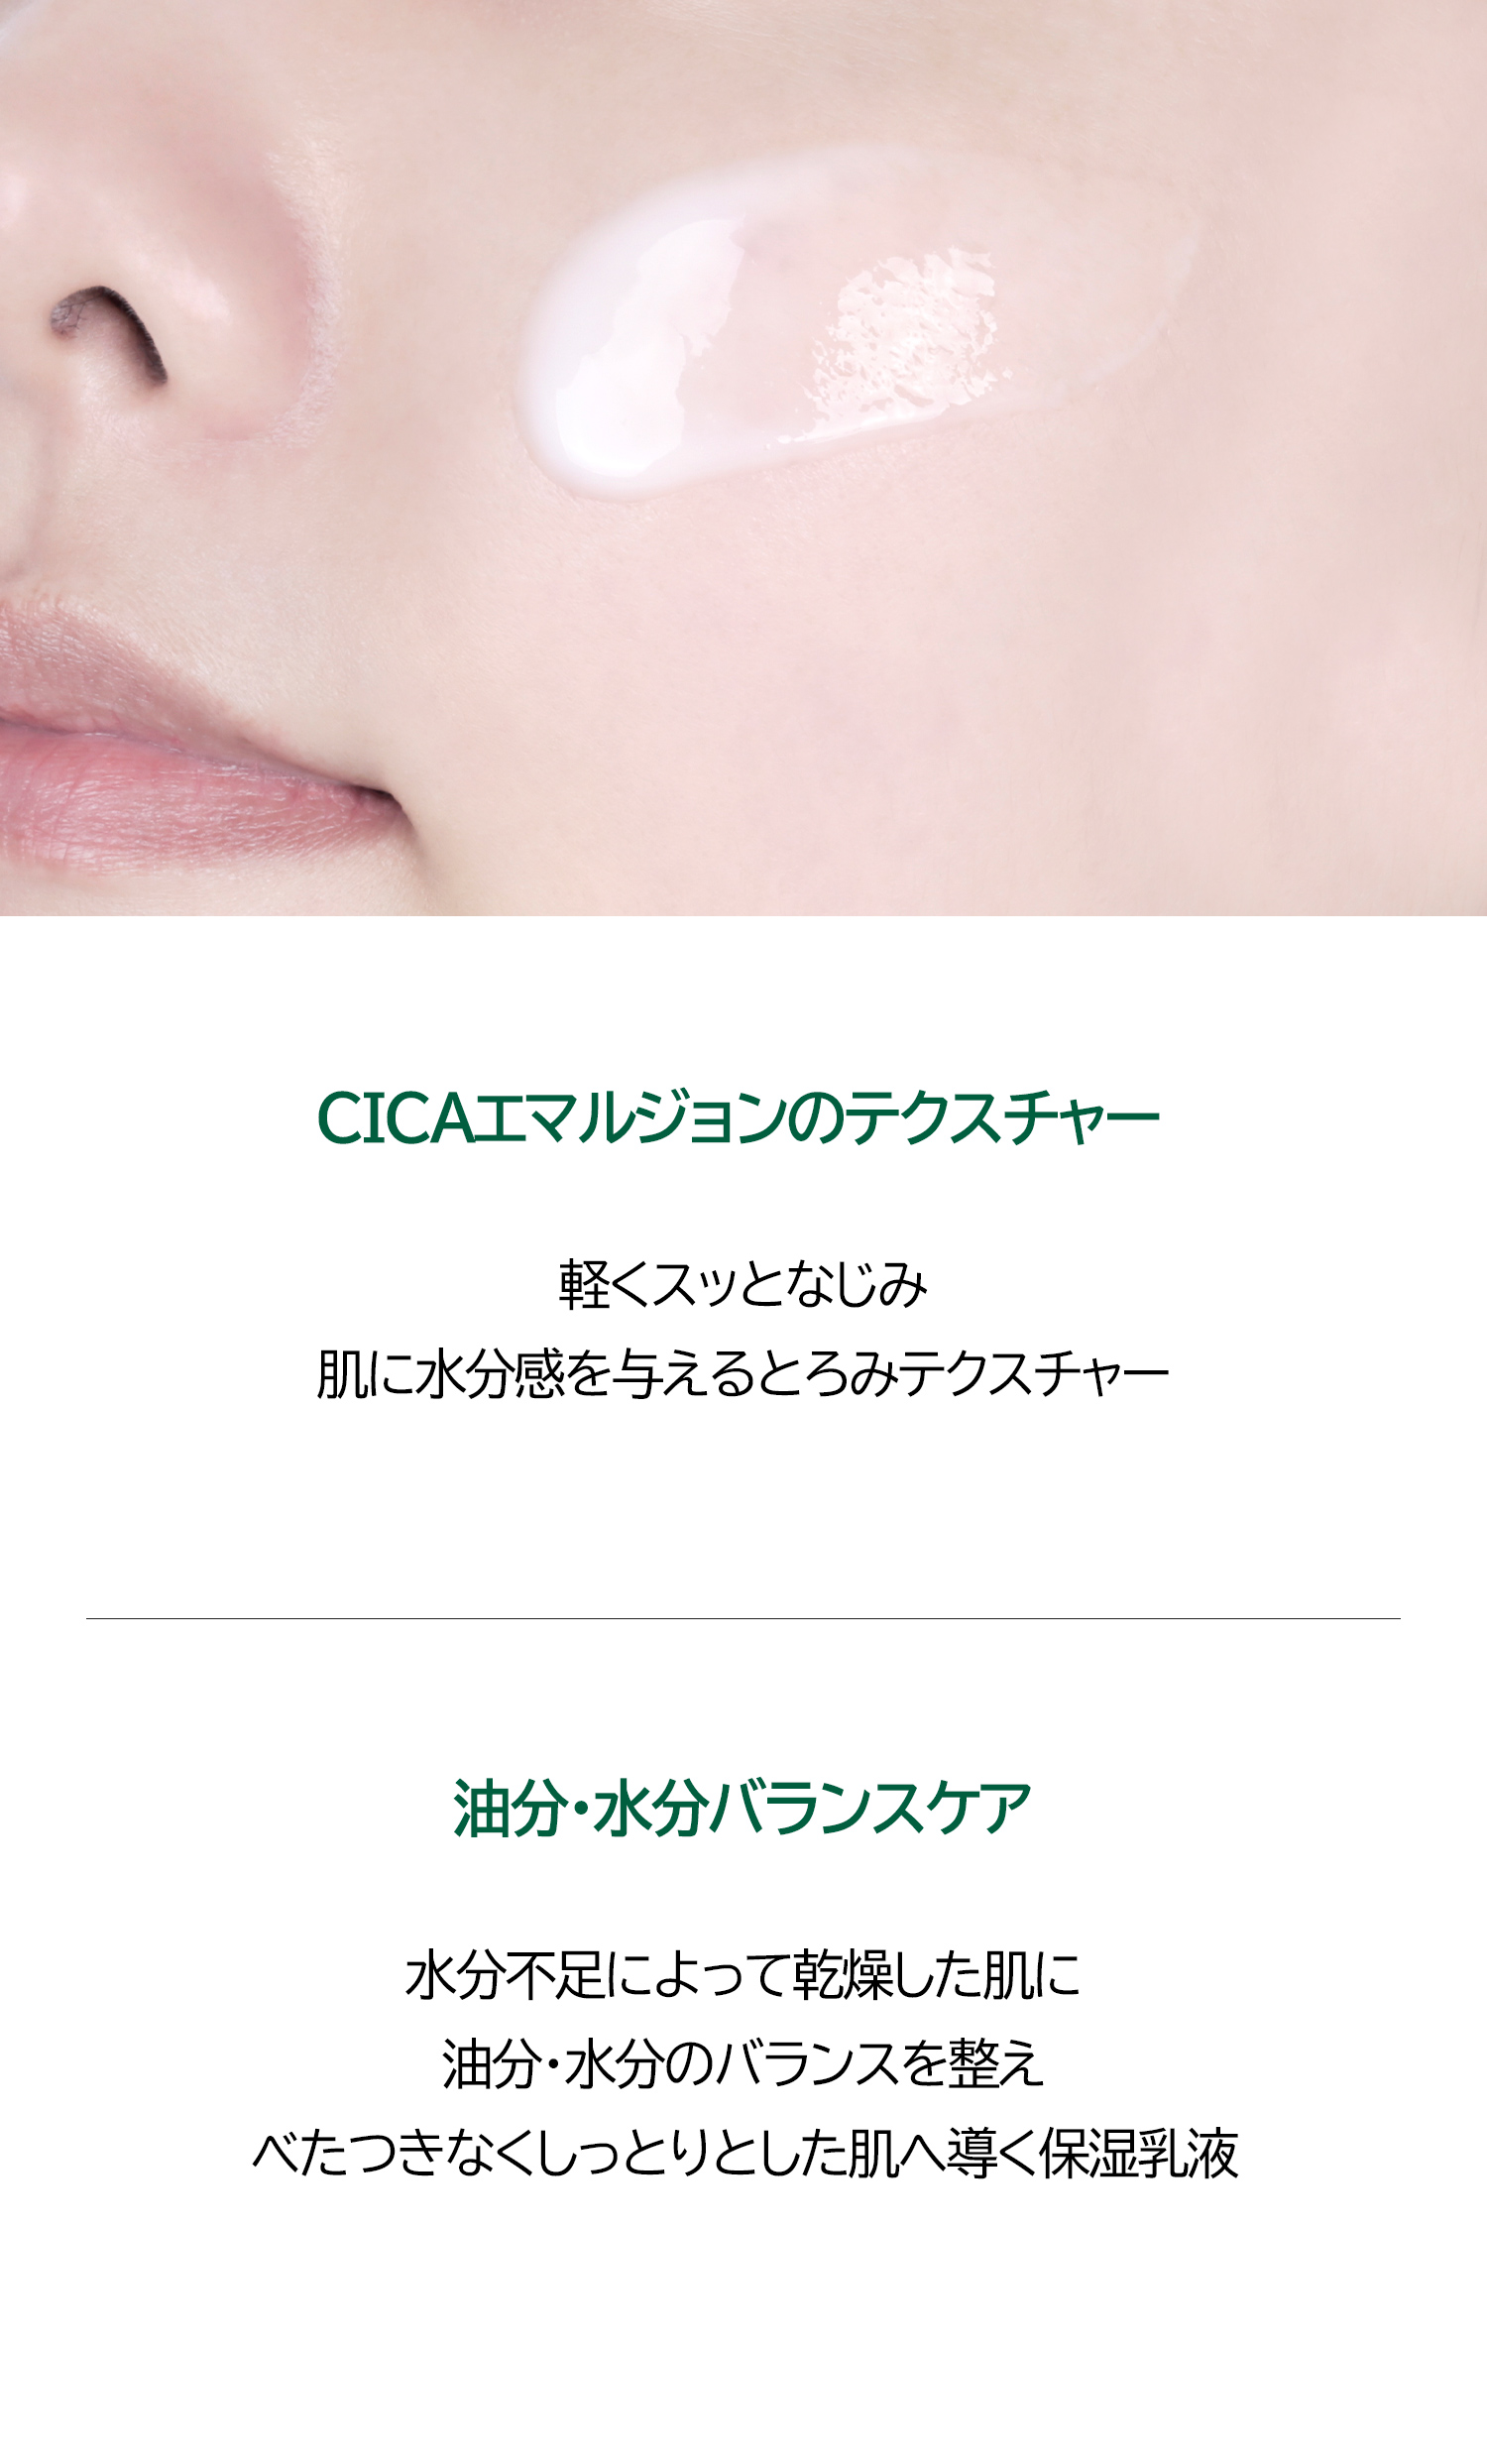 VT CICAエマルジョン | スペシャルケア・美容液 - VT Cosmetics